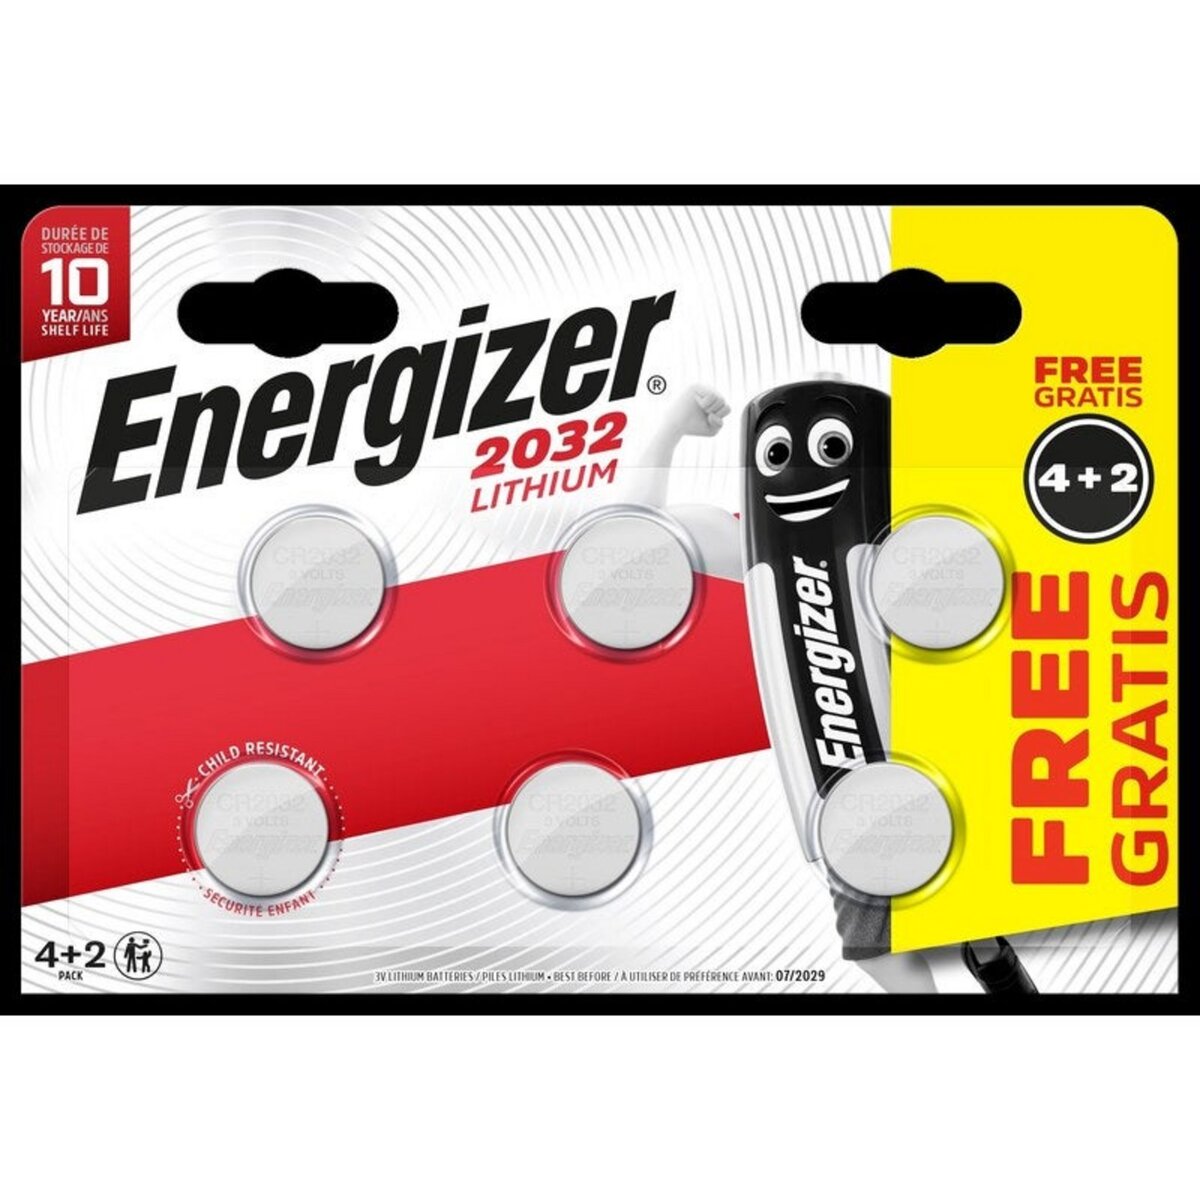 Energizer pile bouton CR2450 - Piles